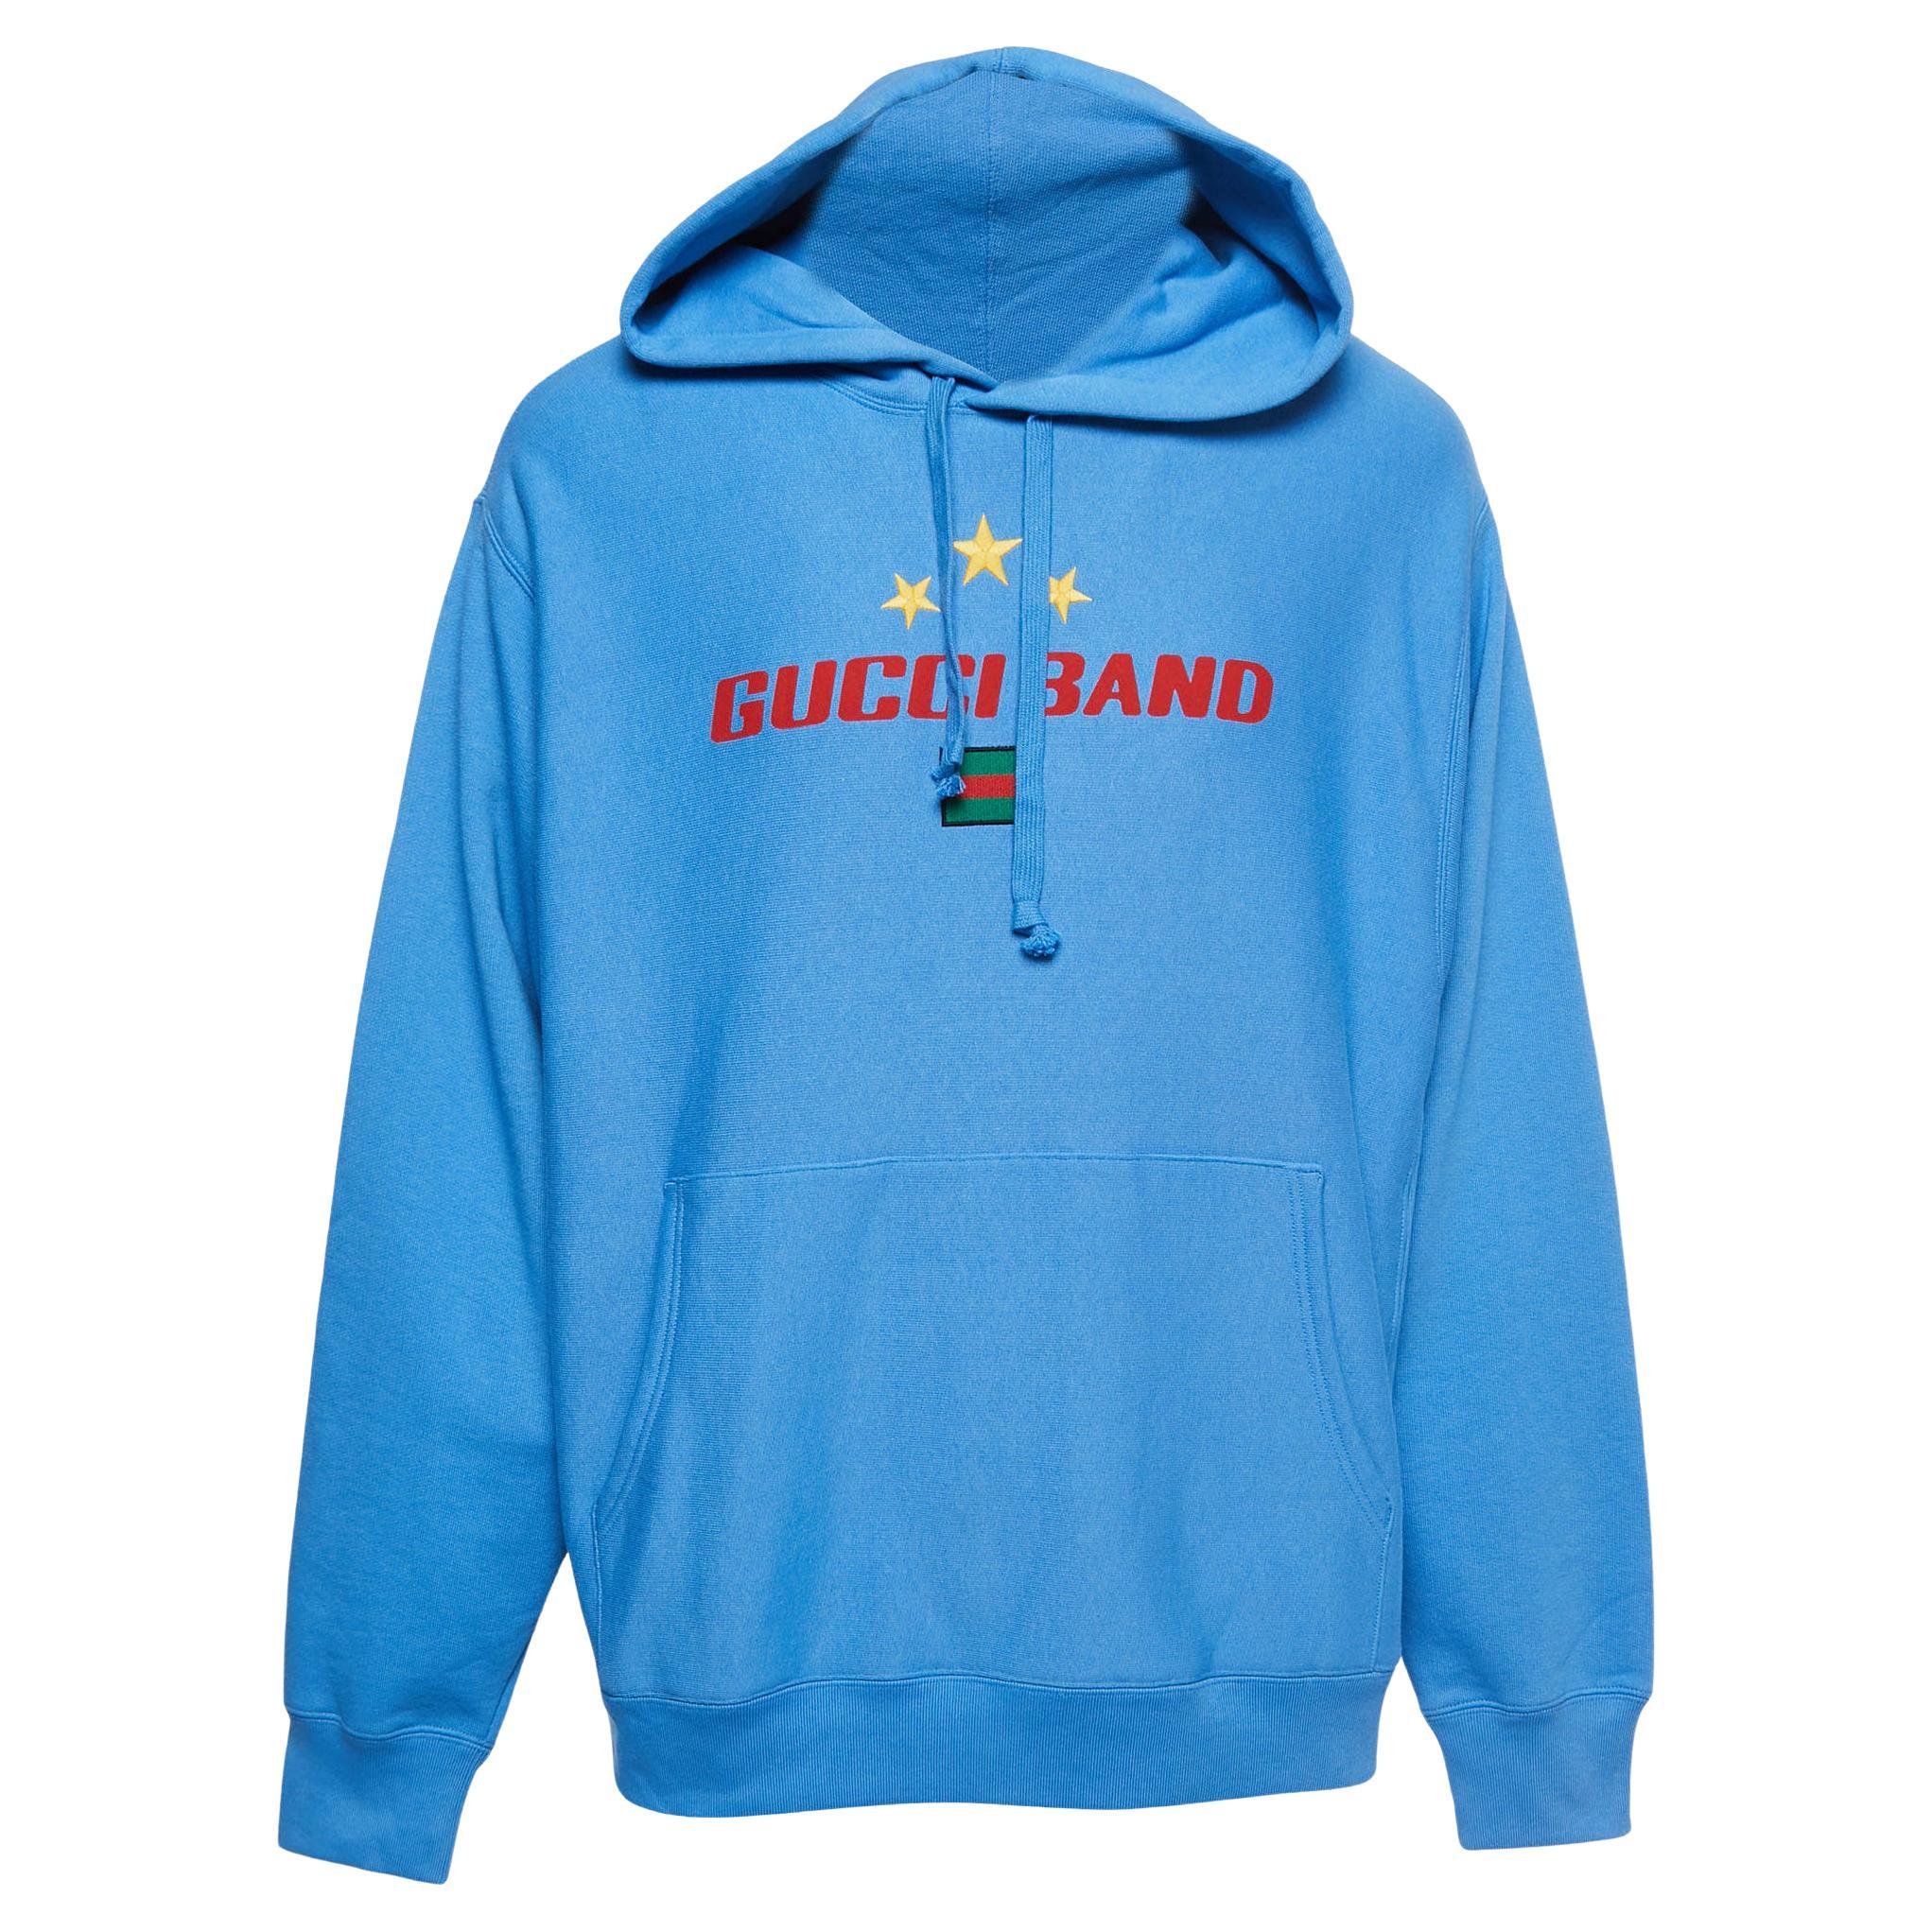 Gucci Blue Gucci Band Print Cotton Hooded Sweatshirt XXL